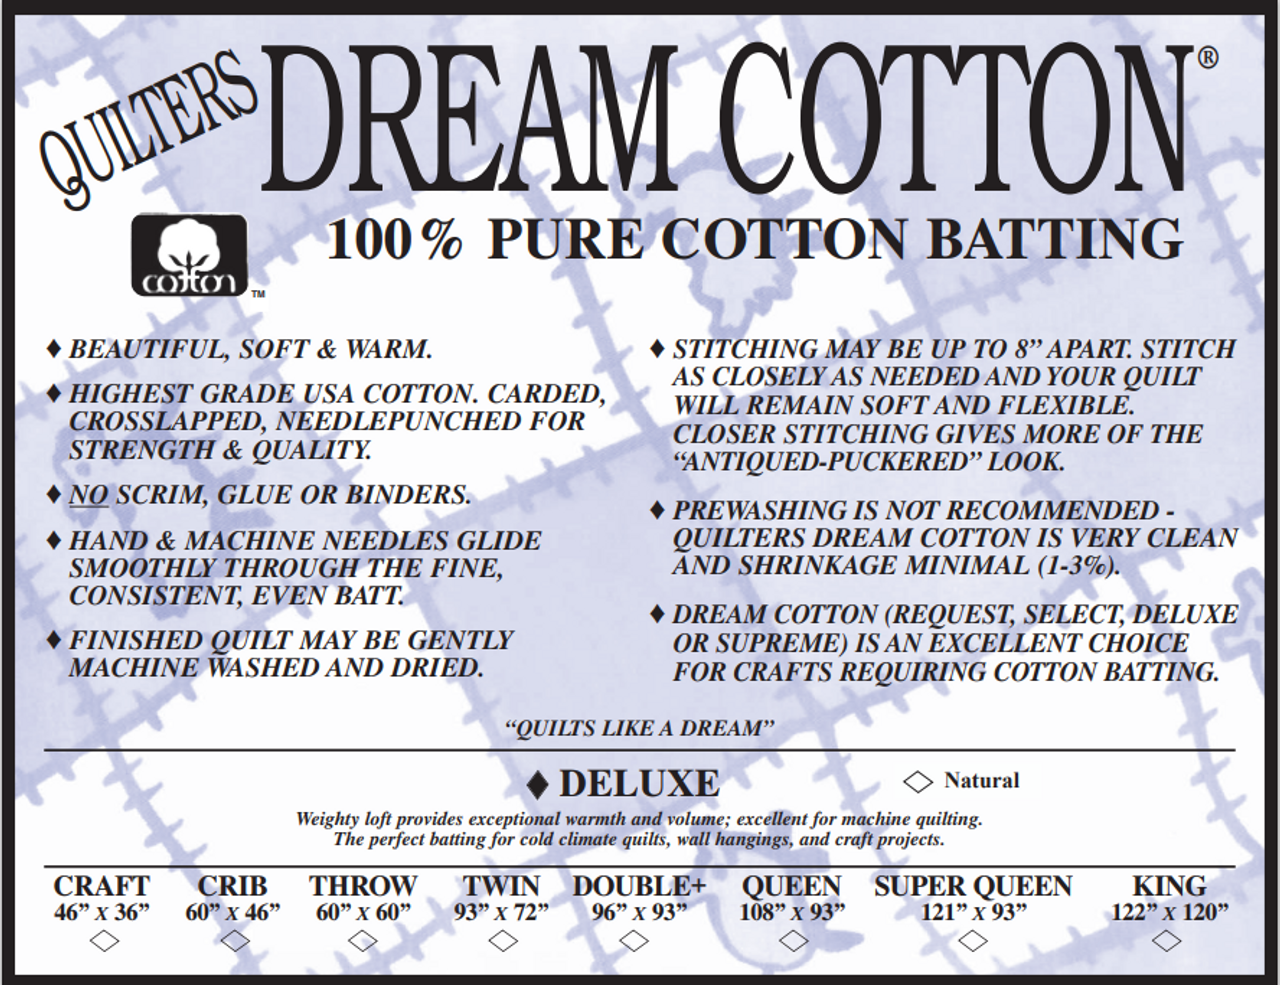 Craft Size Warm & Natural Unbleached Cotton Batting —